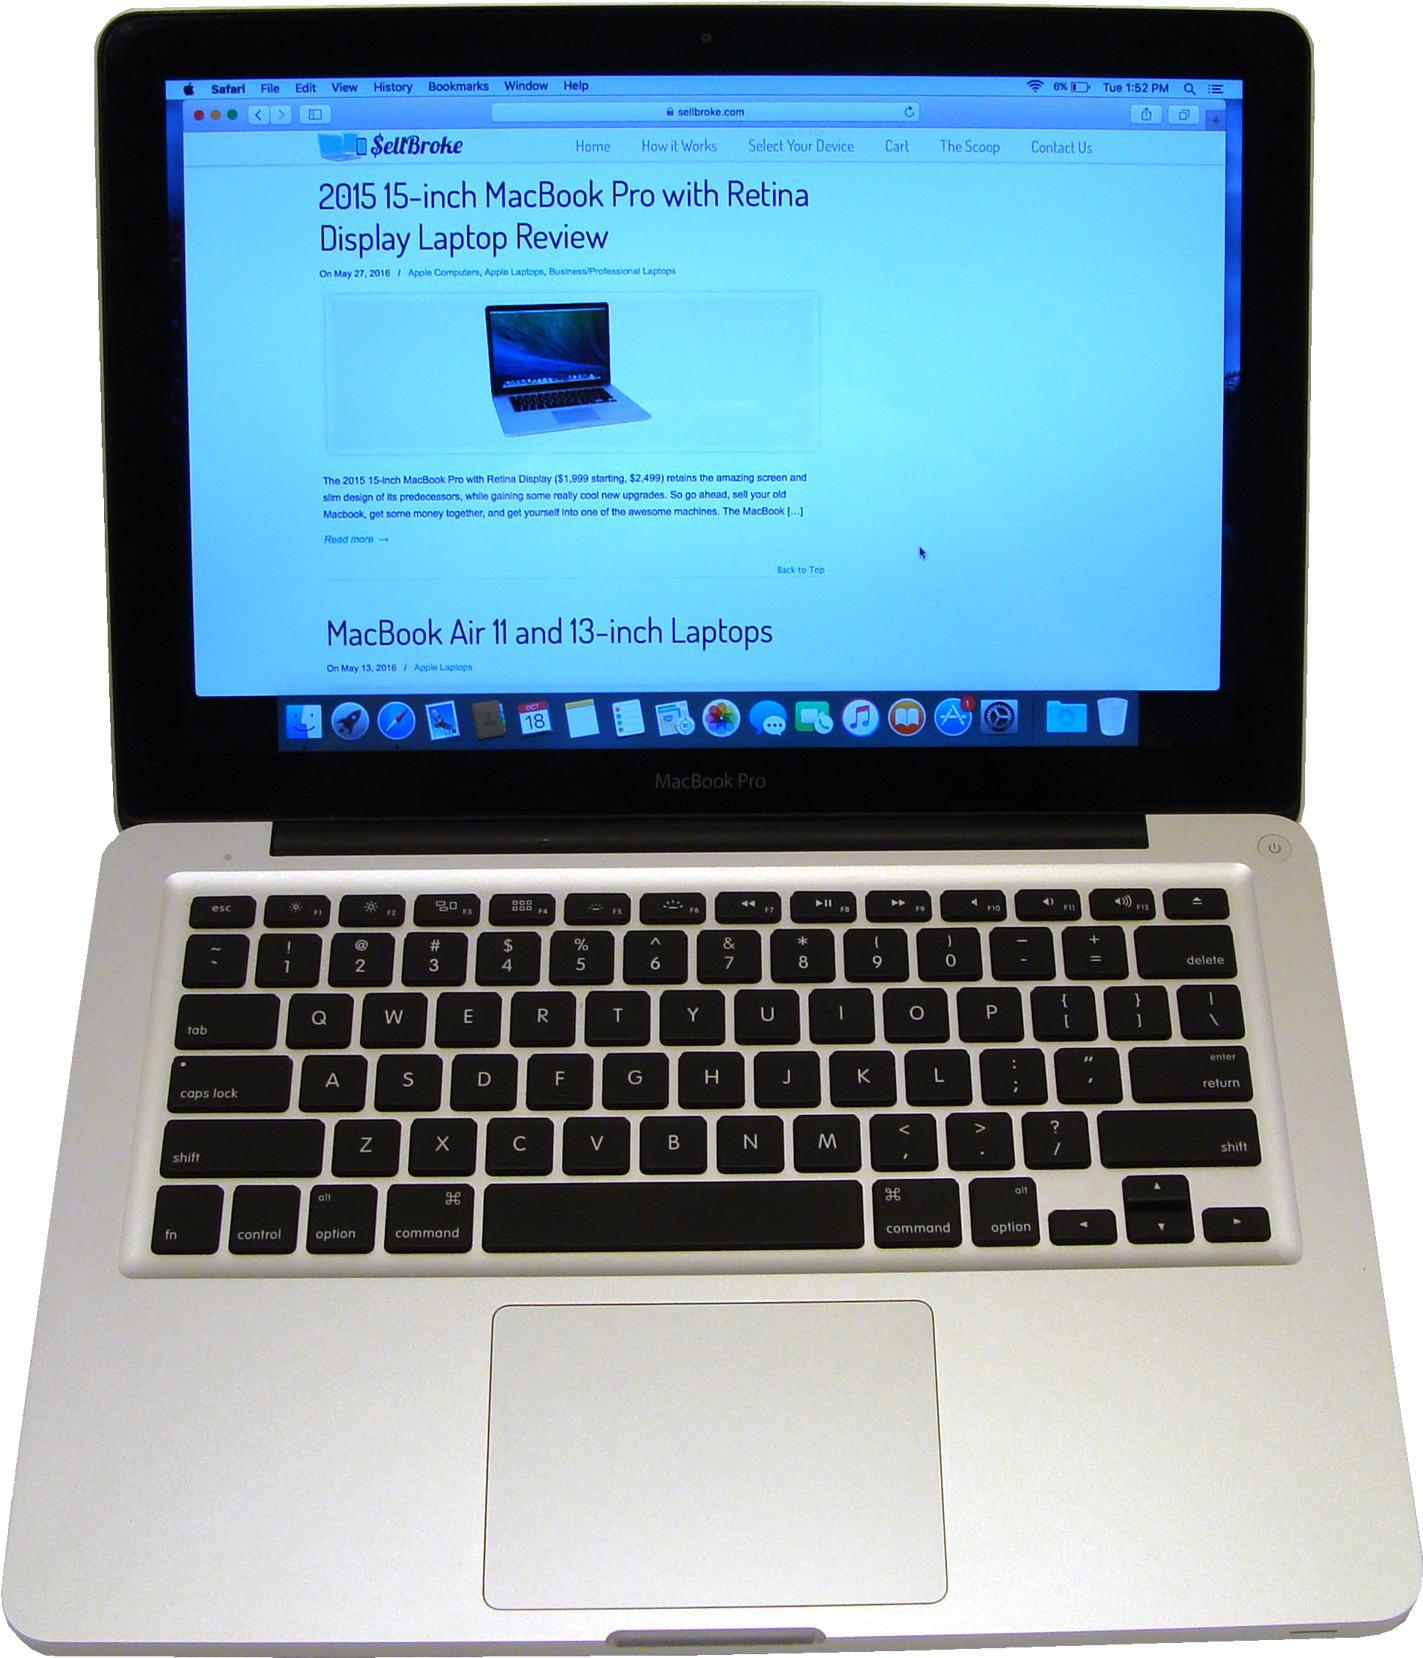 2015 Mac Book Pro Retina Display Review